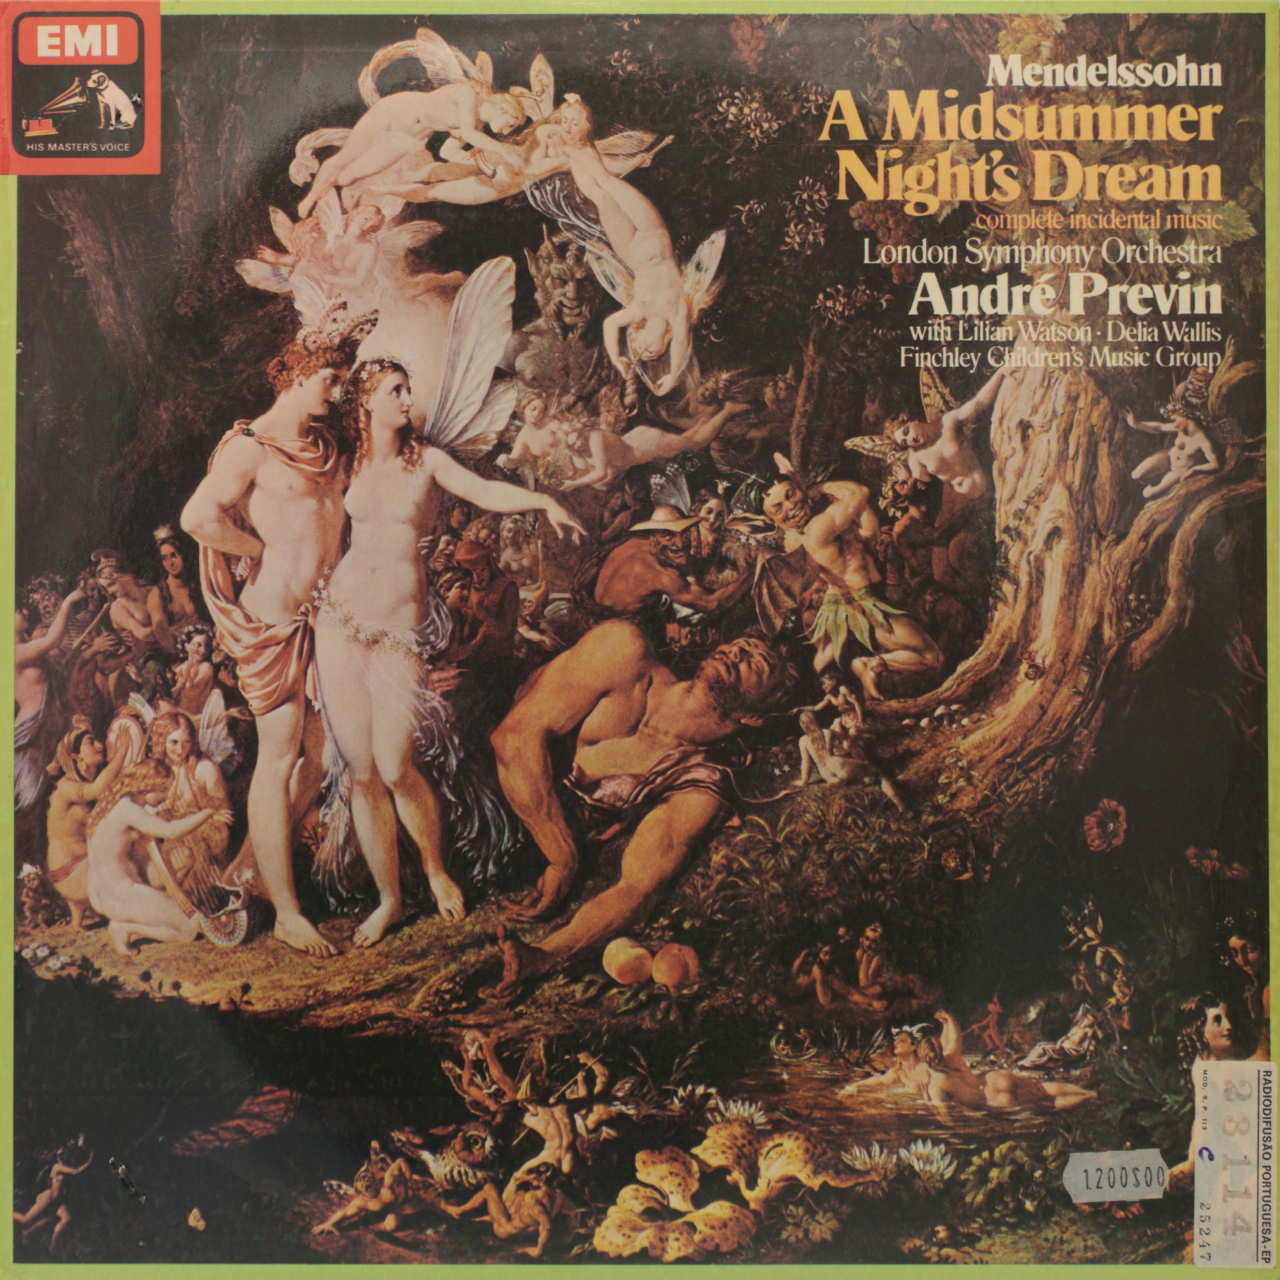 Mendelssohn: Complete incidental music to Shakespeares A Midsummer Nights Dream, Op. 61